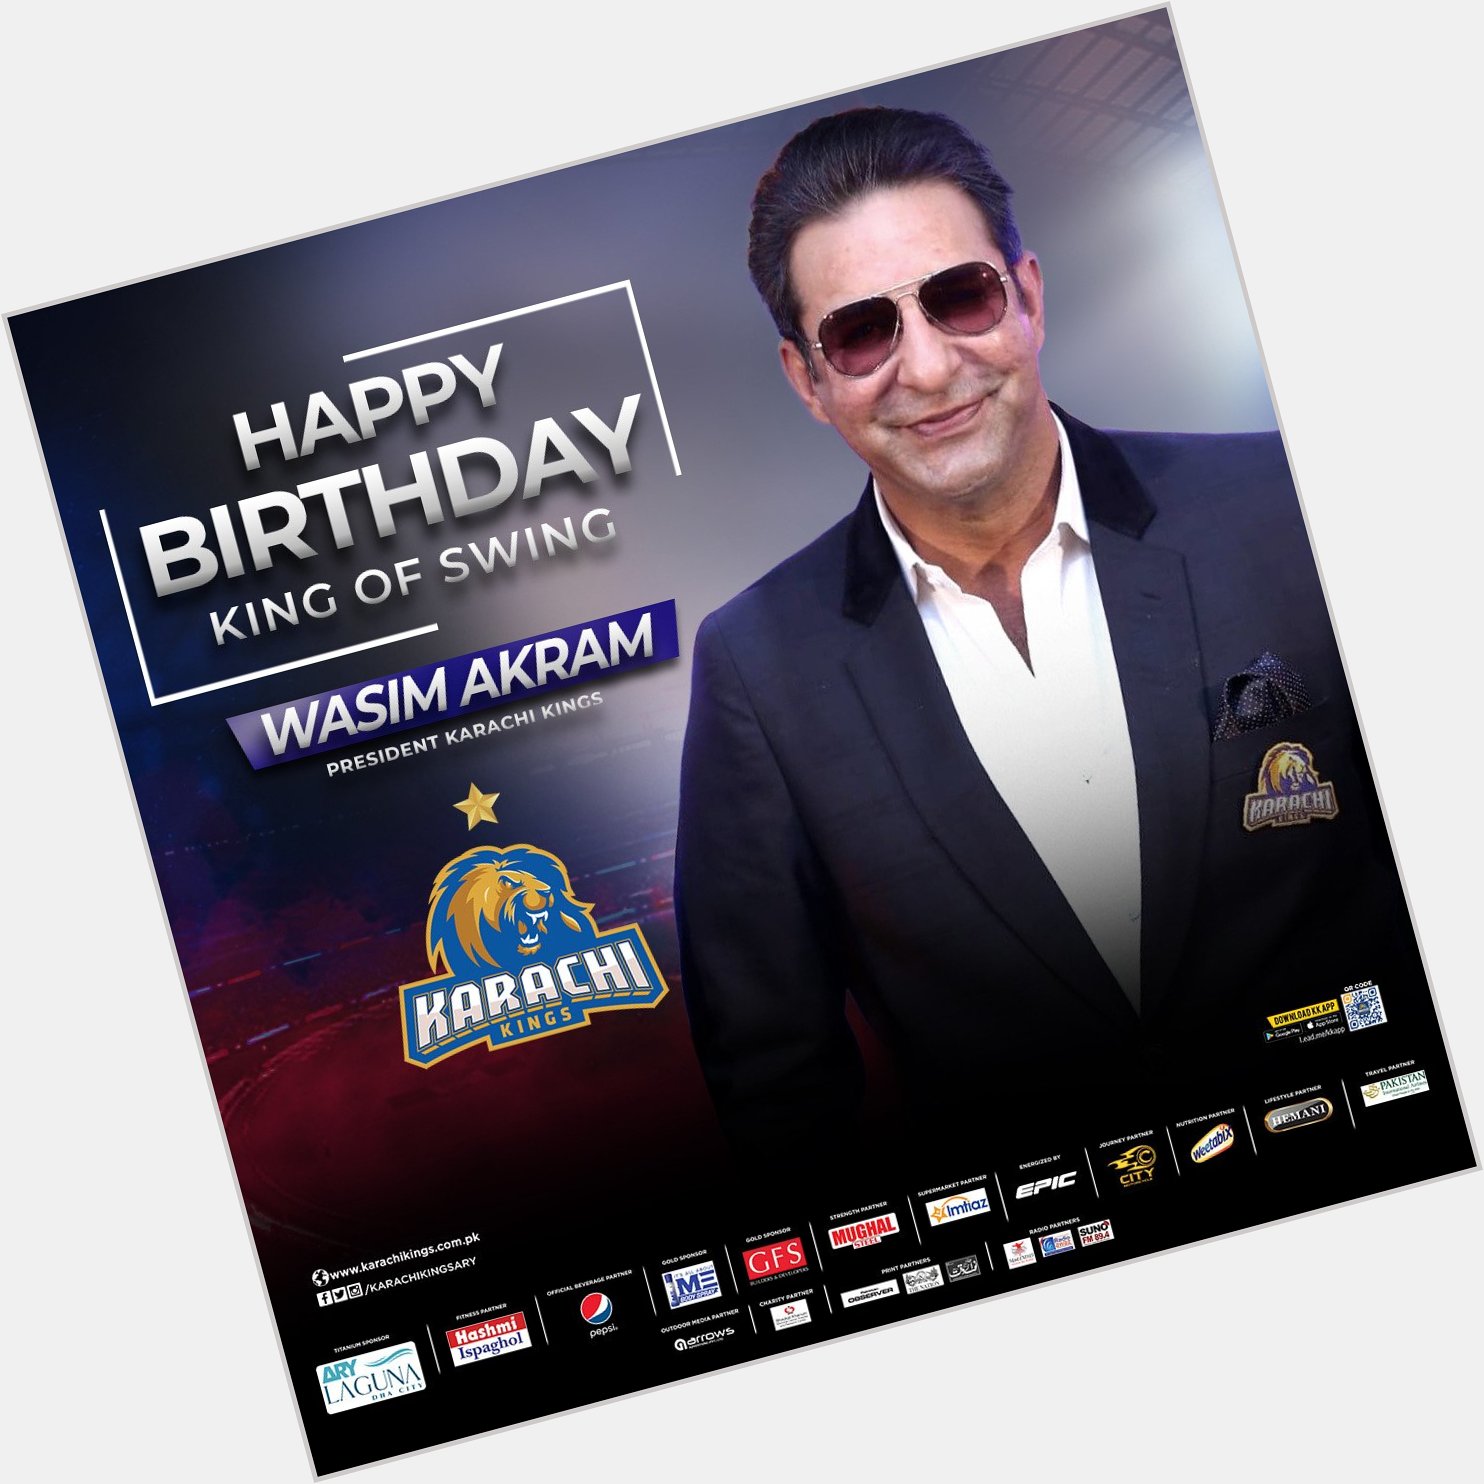  Happy birthday
king of swing legend wasim akram 